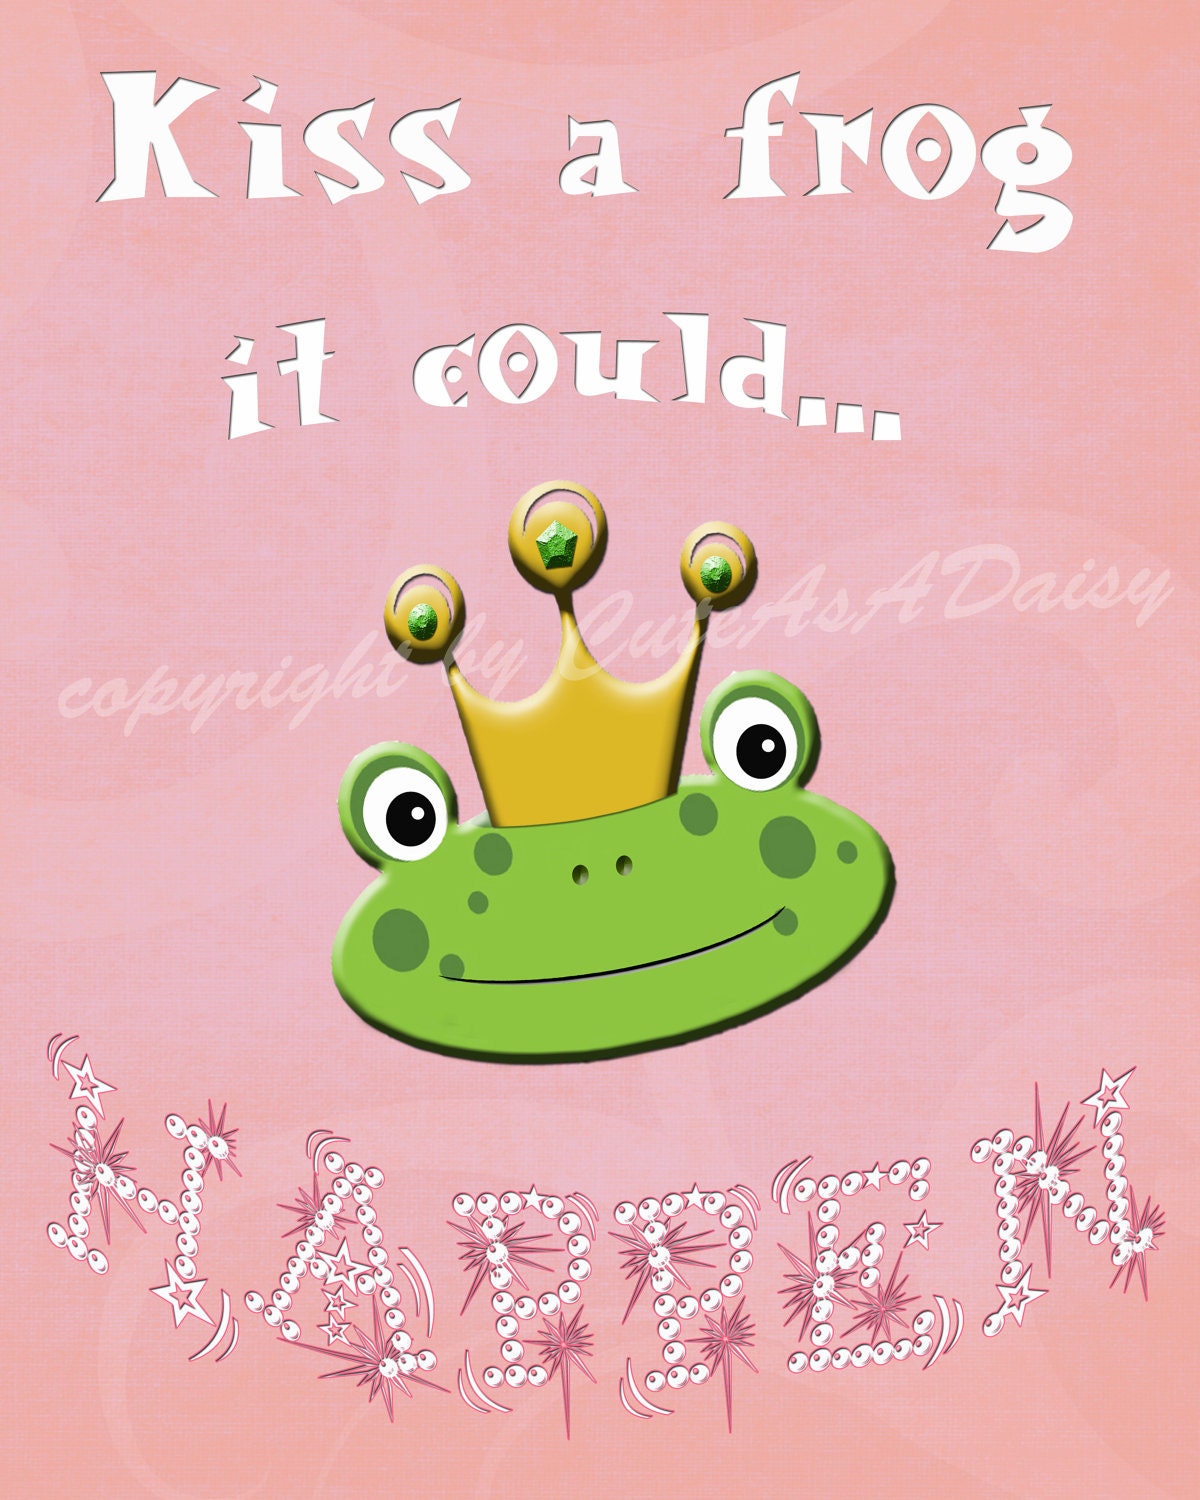 Kiss a frog... Fun Wall Art Print 5"x7" Pink and Green Frog Prince